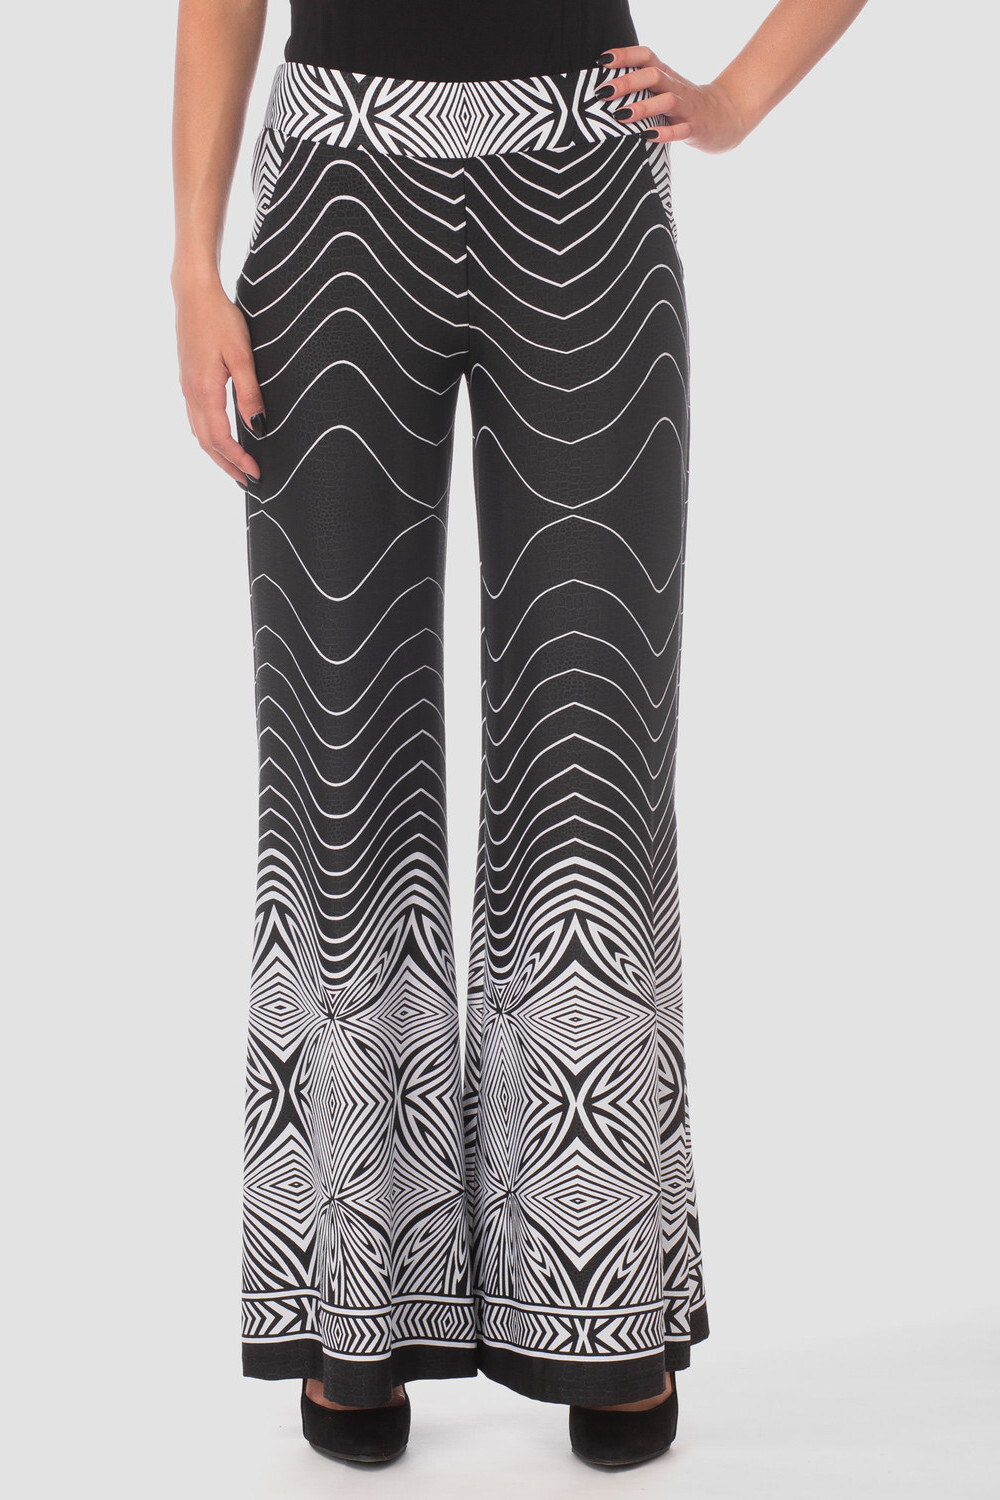 Joseph Ribkoff pant style 173856. Black/white